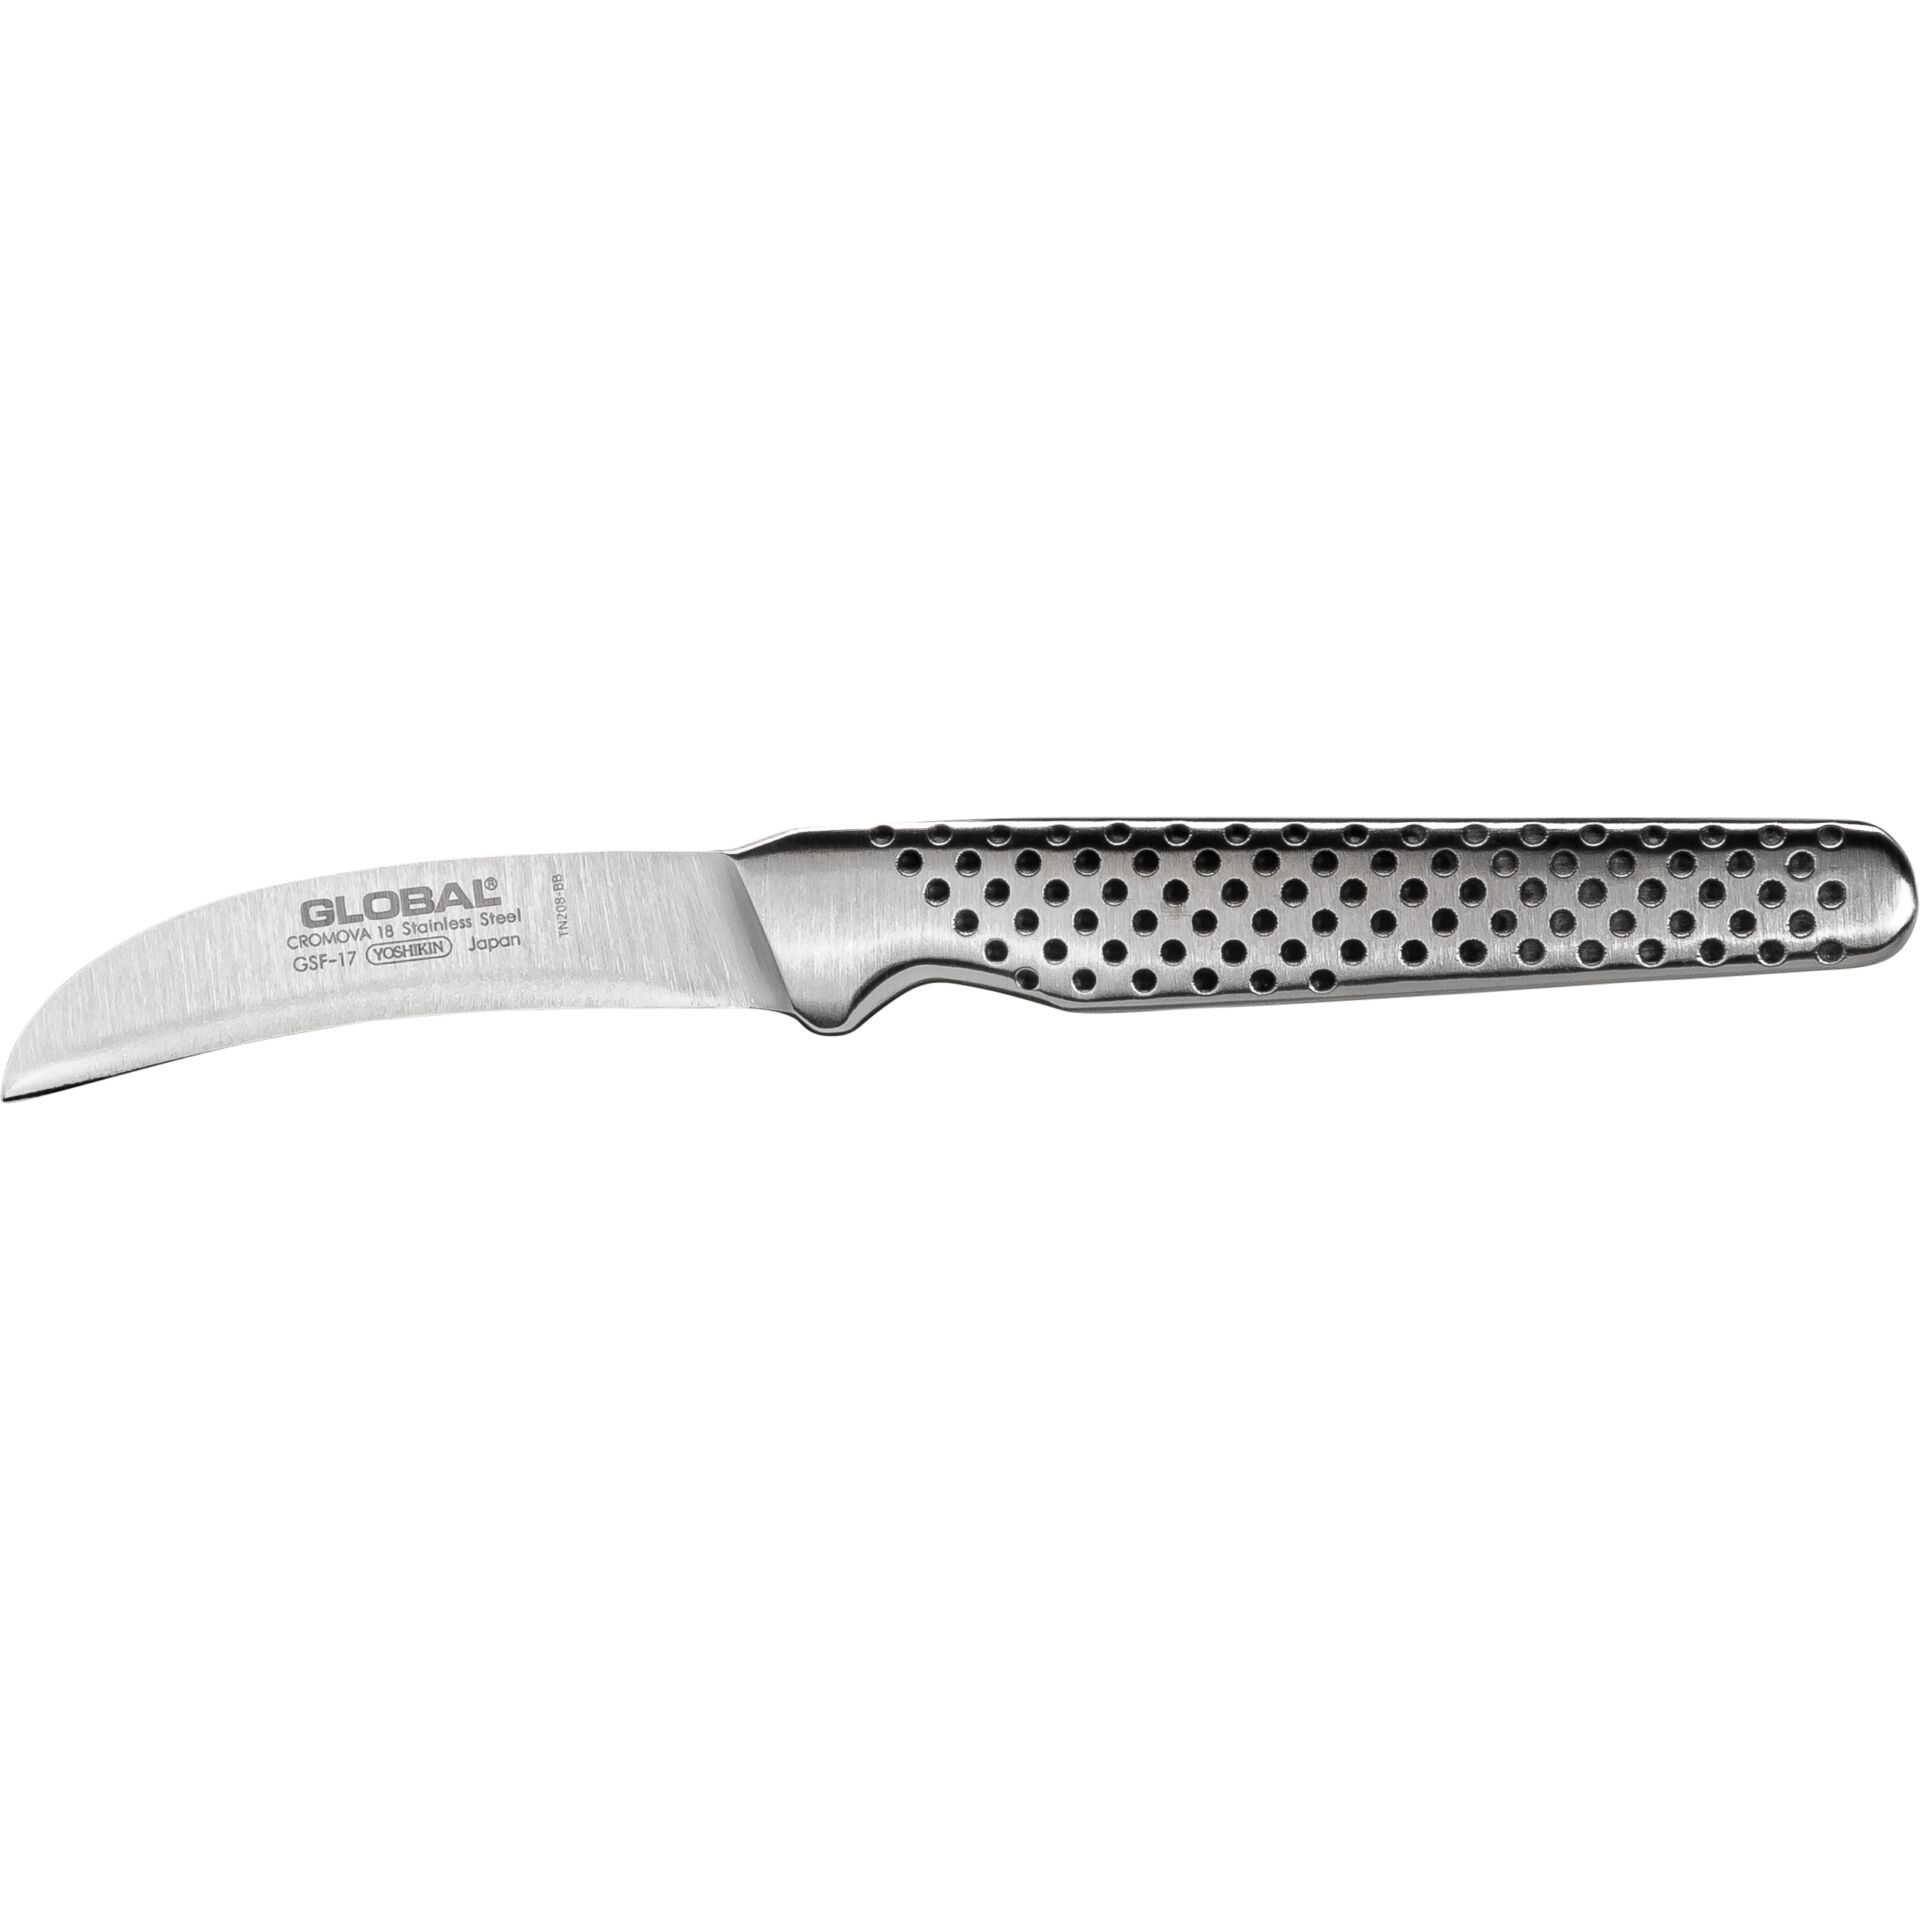 Global coltello GSF-17, 6 cm